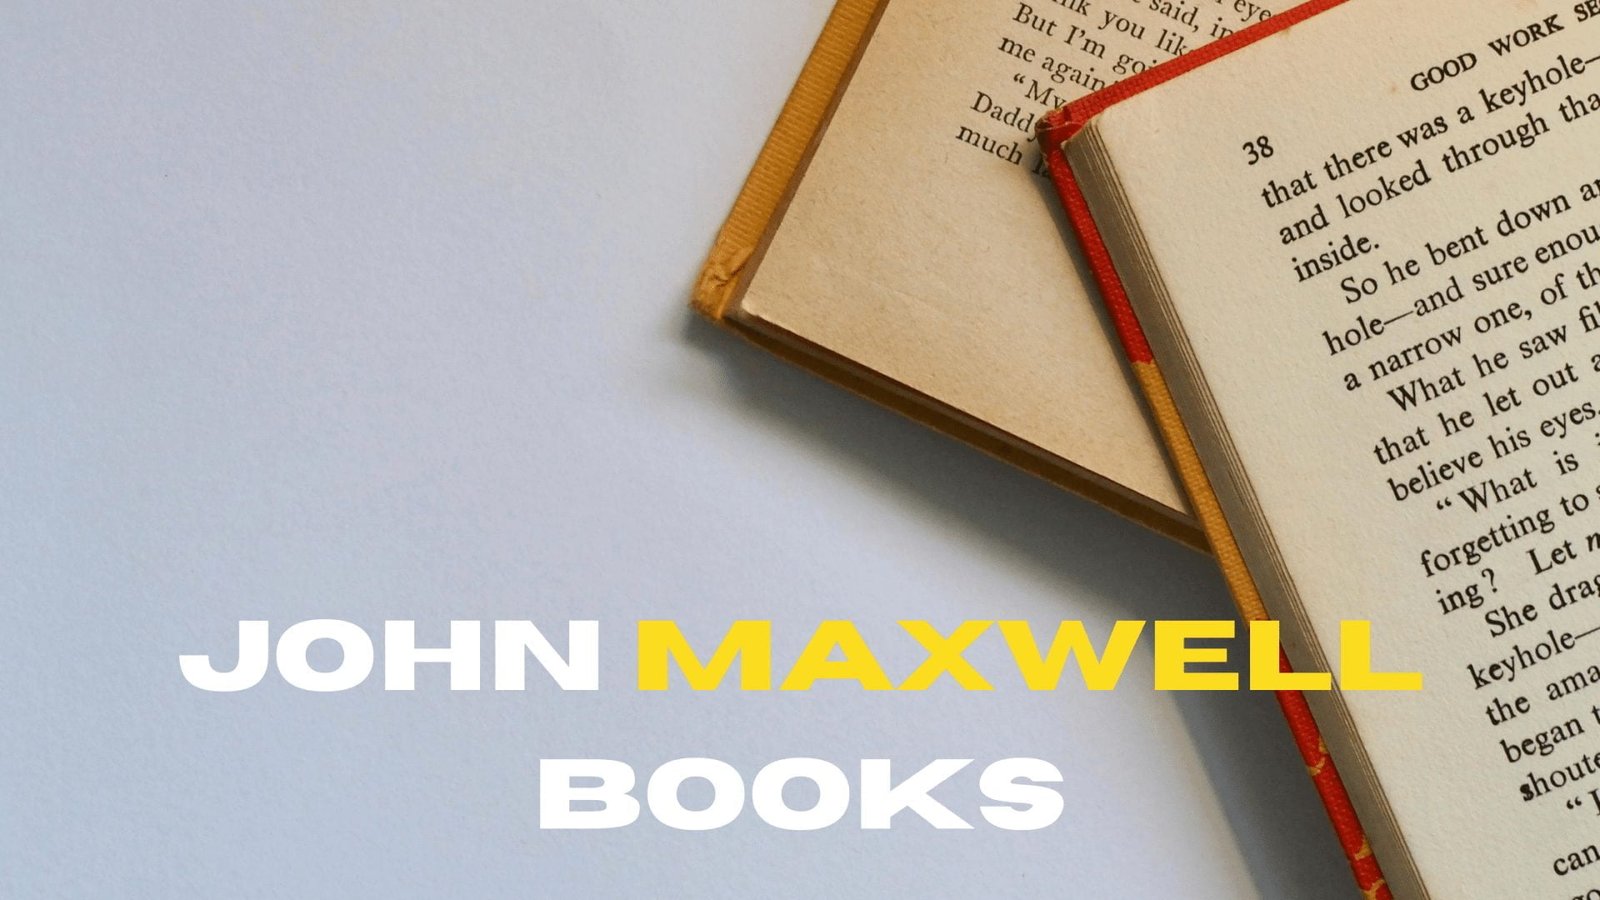 John Maxwell Books Images